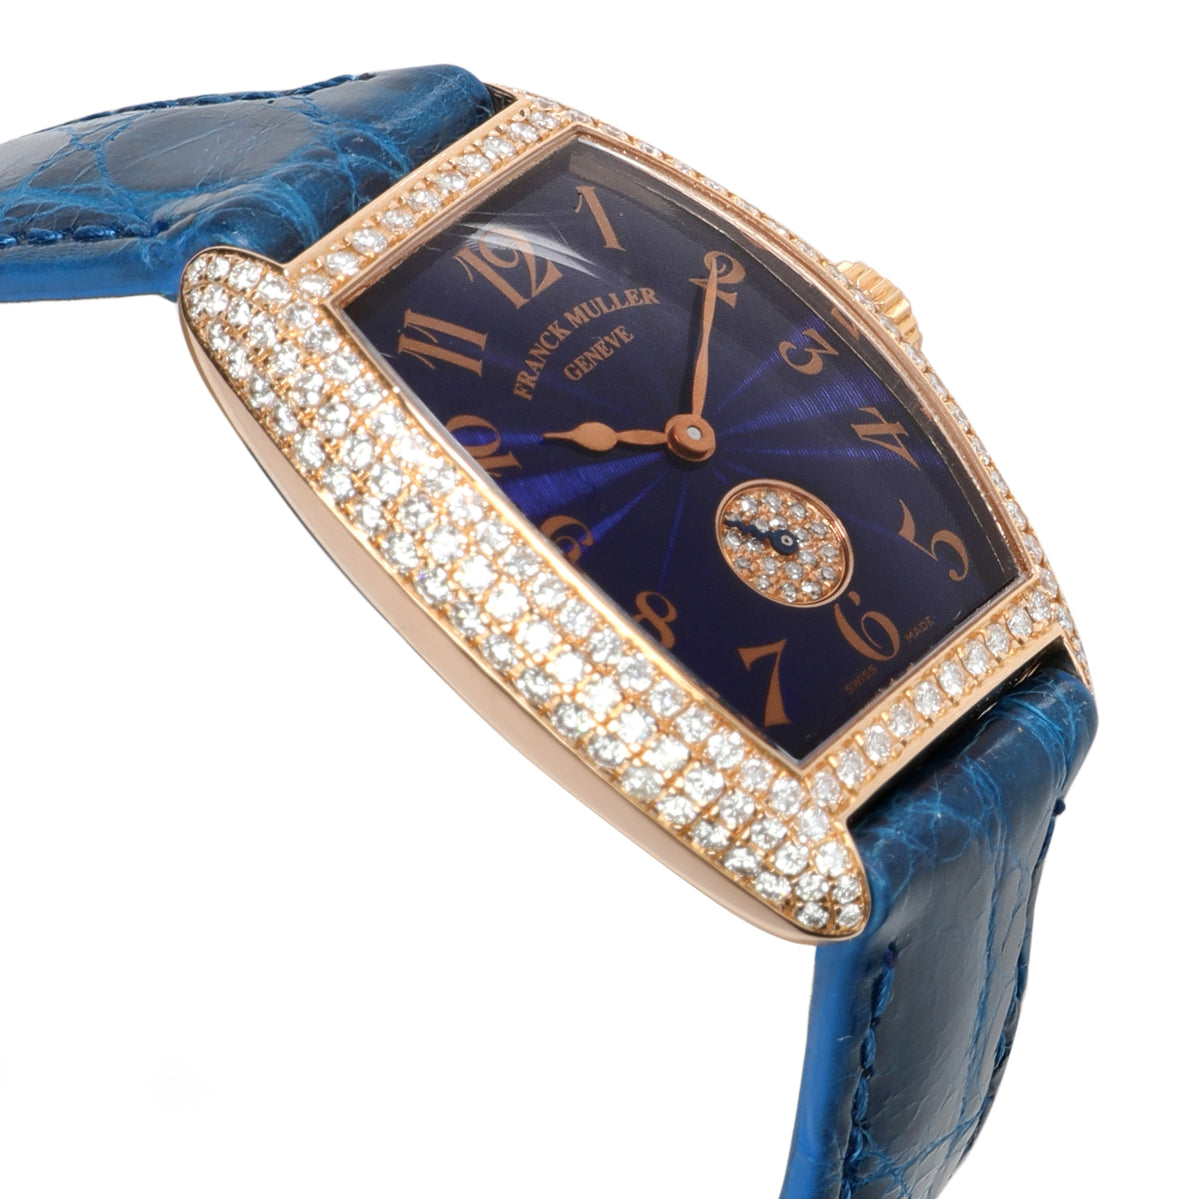 Franck Muller Curvex 1750 S6 PMD Women's Watch in 18kt Rose Gold